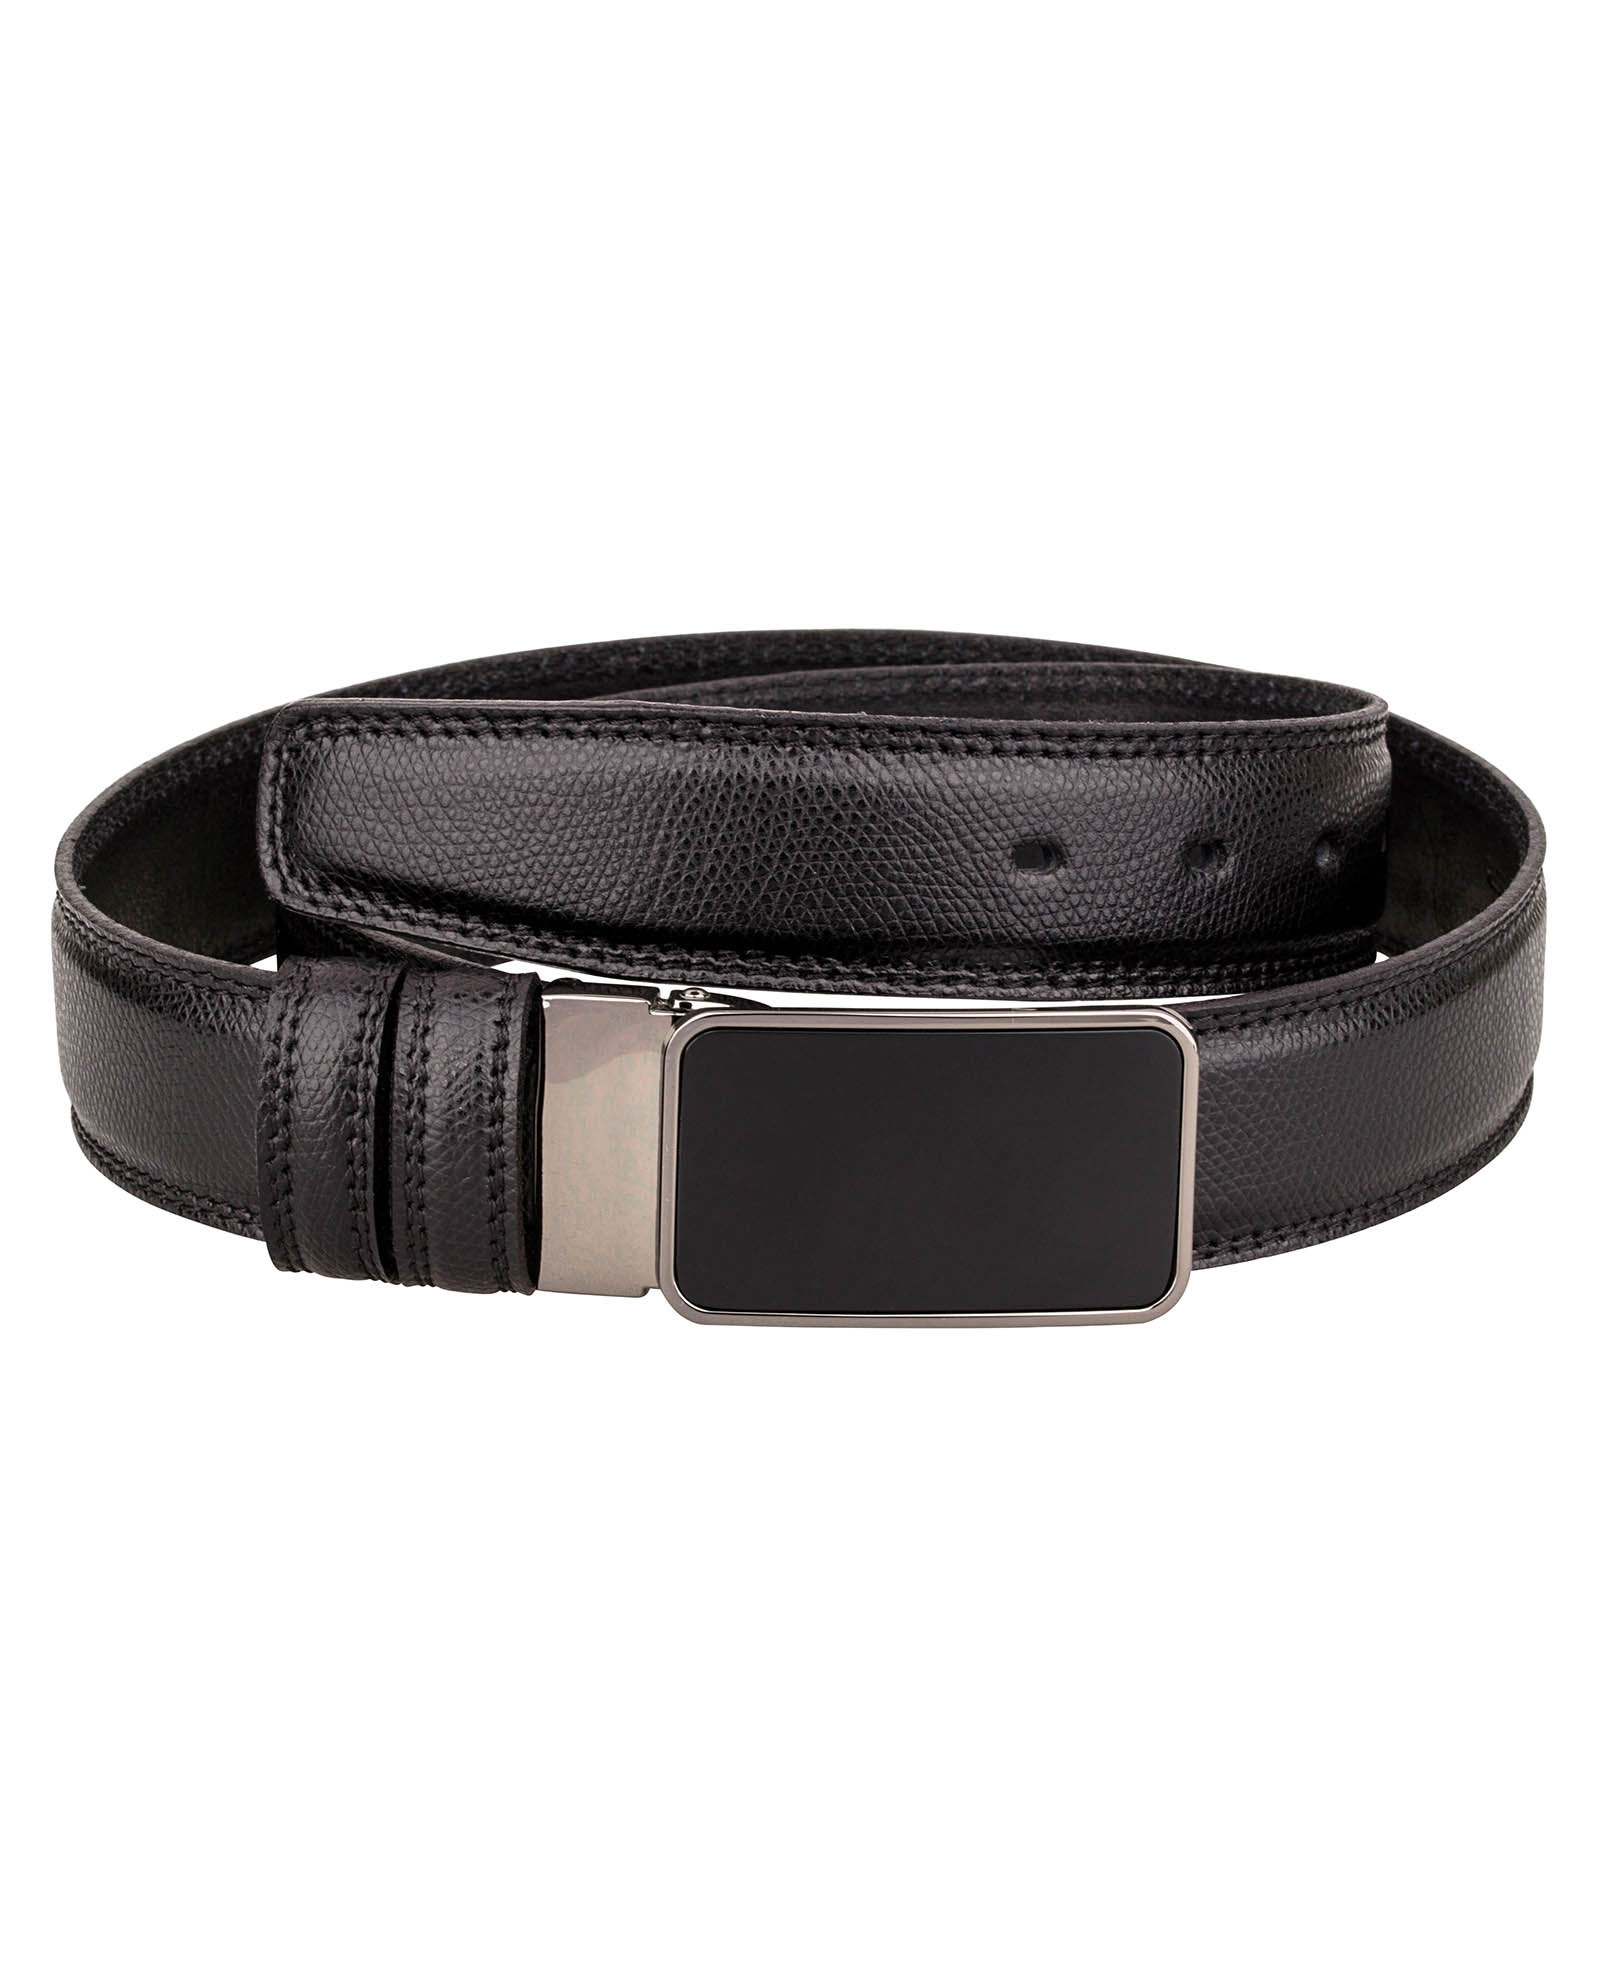 Buy Black Saffiano Leather Belt For Men - Capo Pelle - Free Shipping